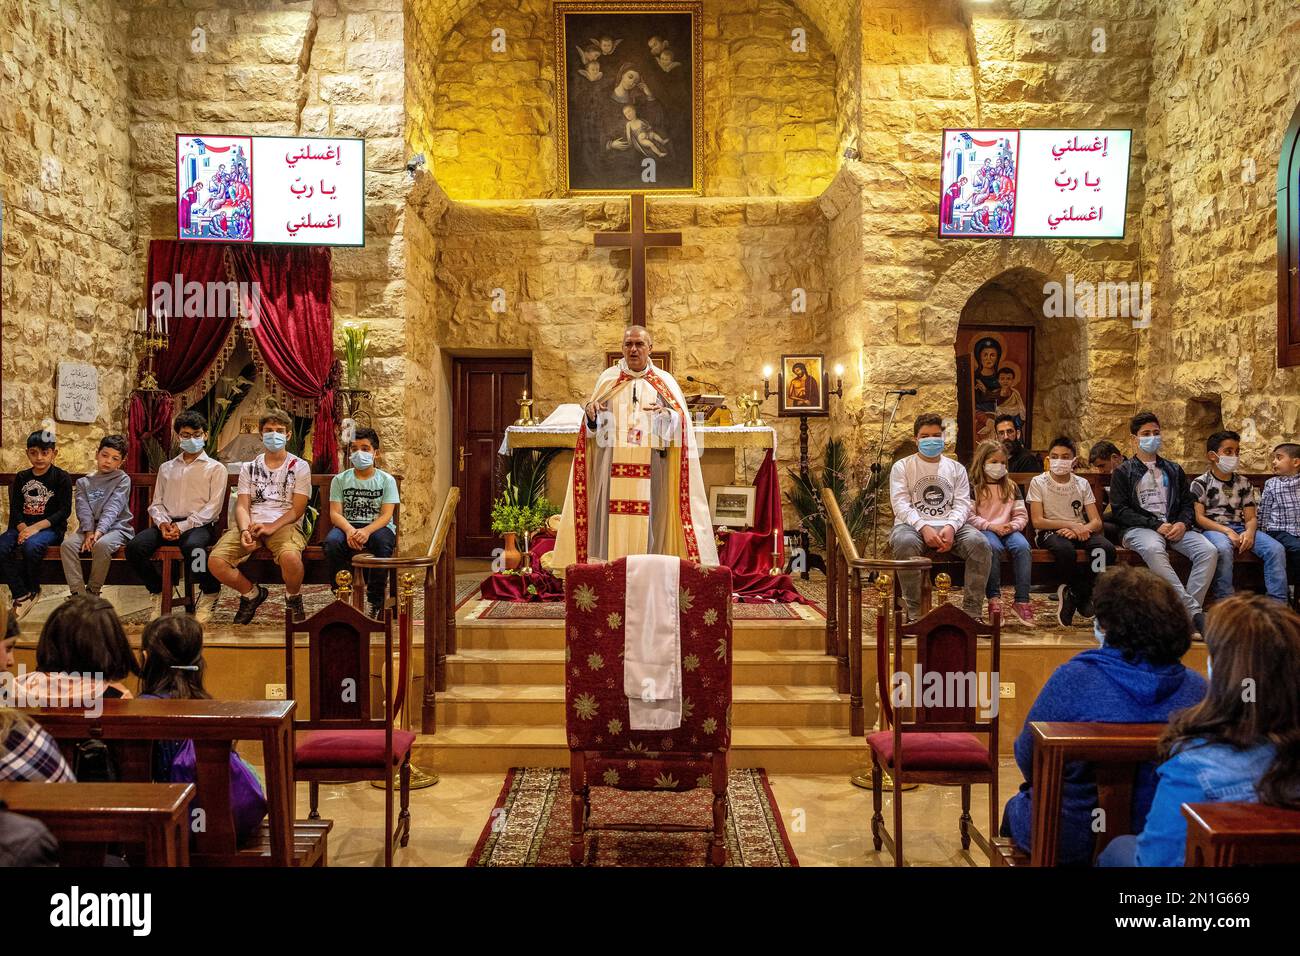 Maundy Thursday celebration in Our Lady Maronite Church, Bdadoun, Lebanon, Middle East Stock Photo